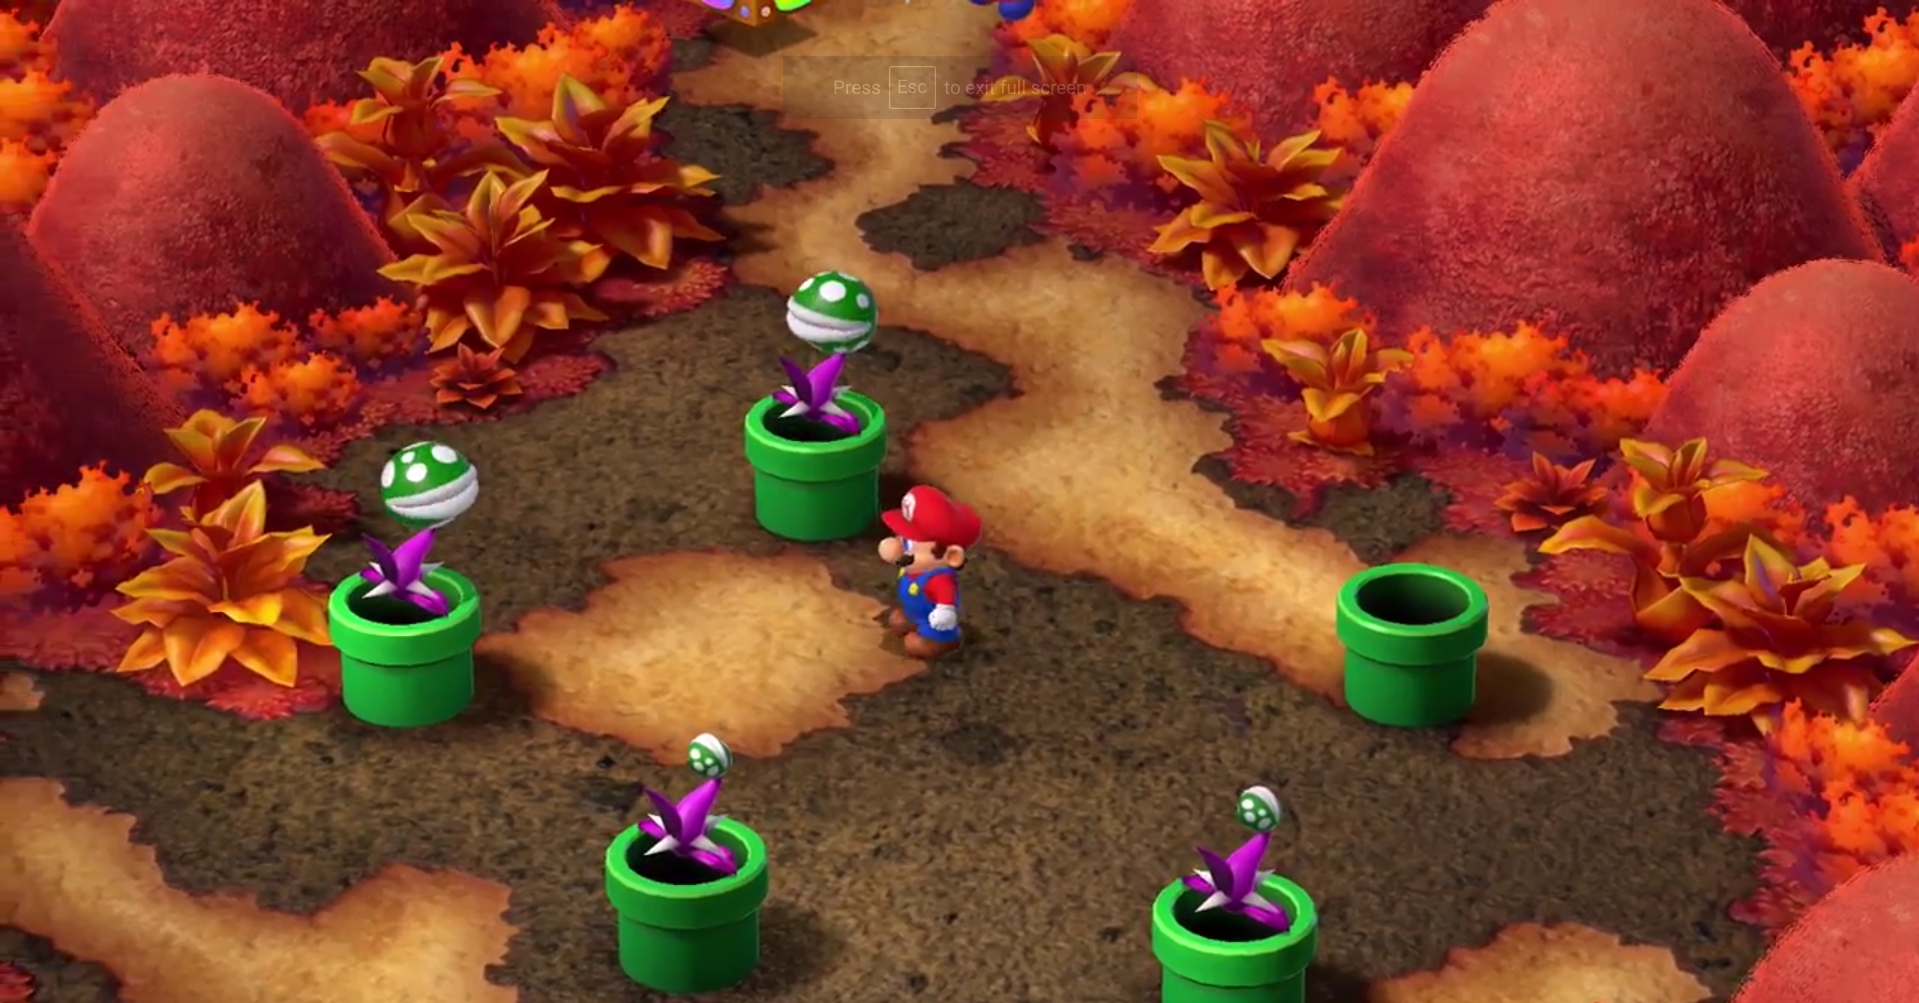 The Piranha Plant leading to Grate Guy's Casino in Super Mario RPG.